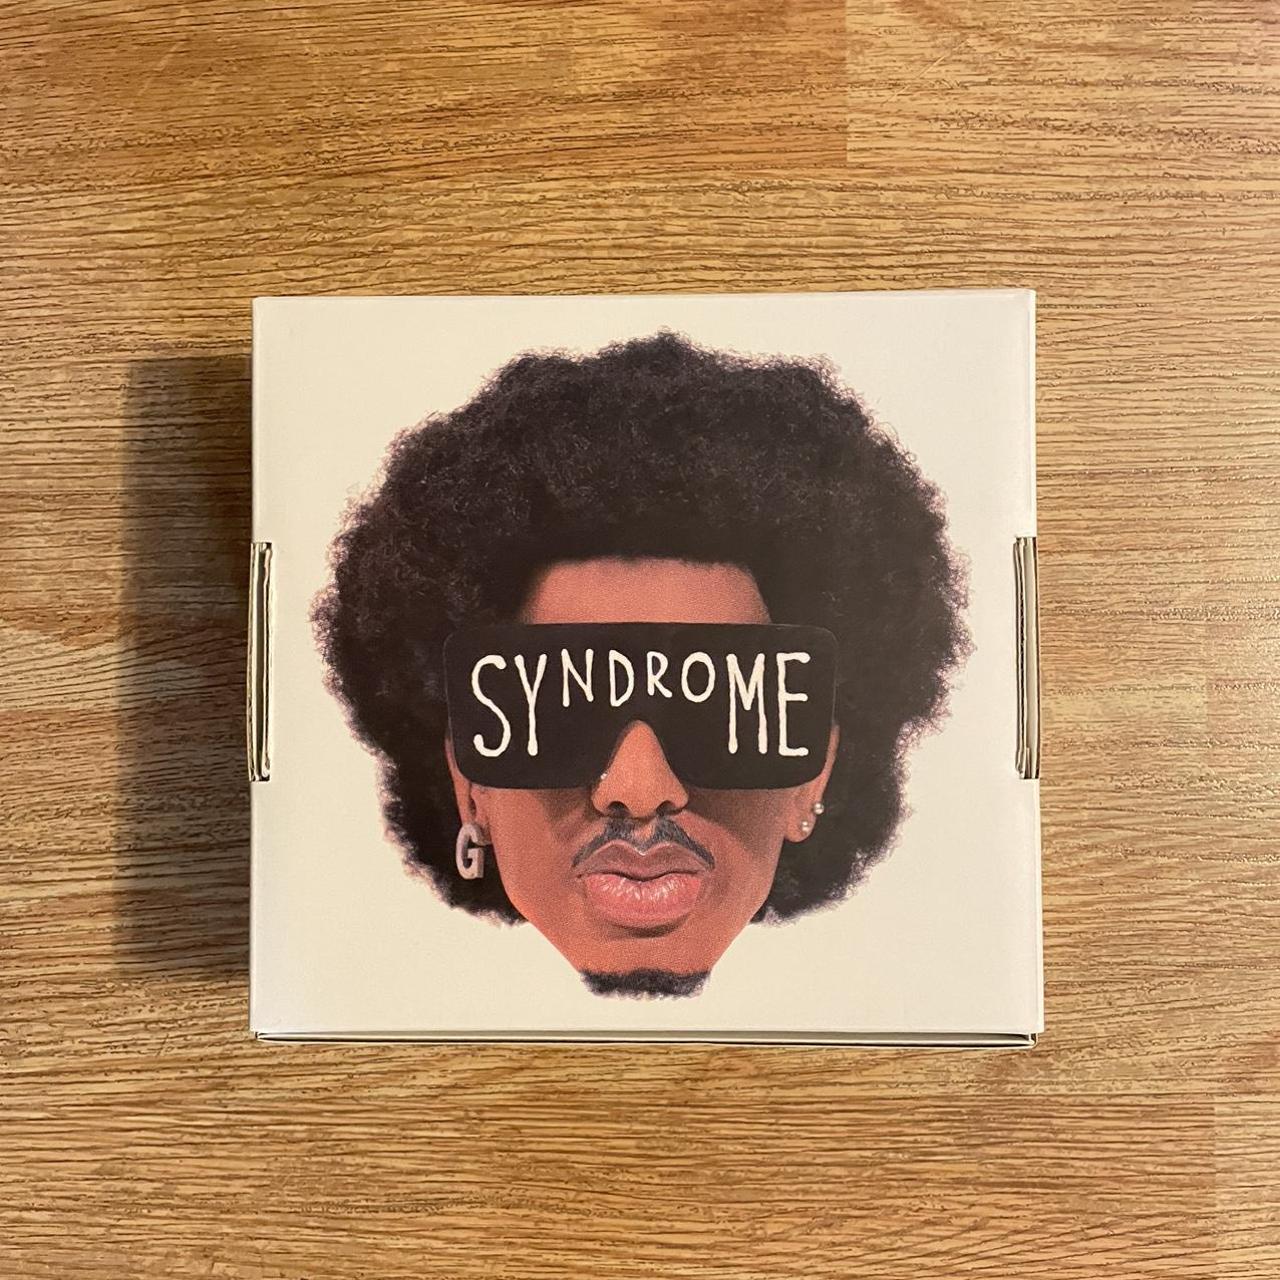 Impostor Syndrome - Album by AG Club